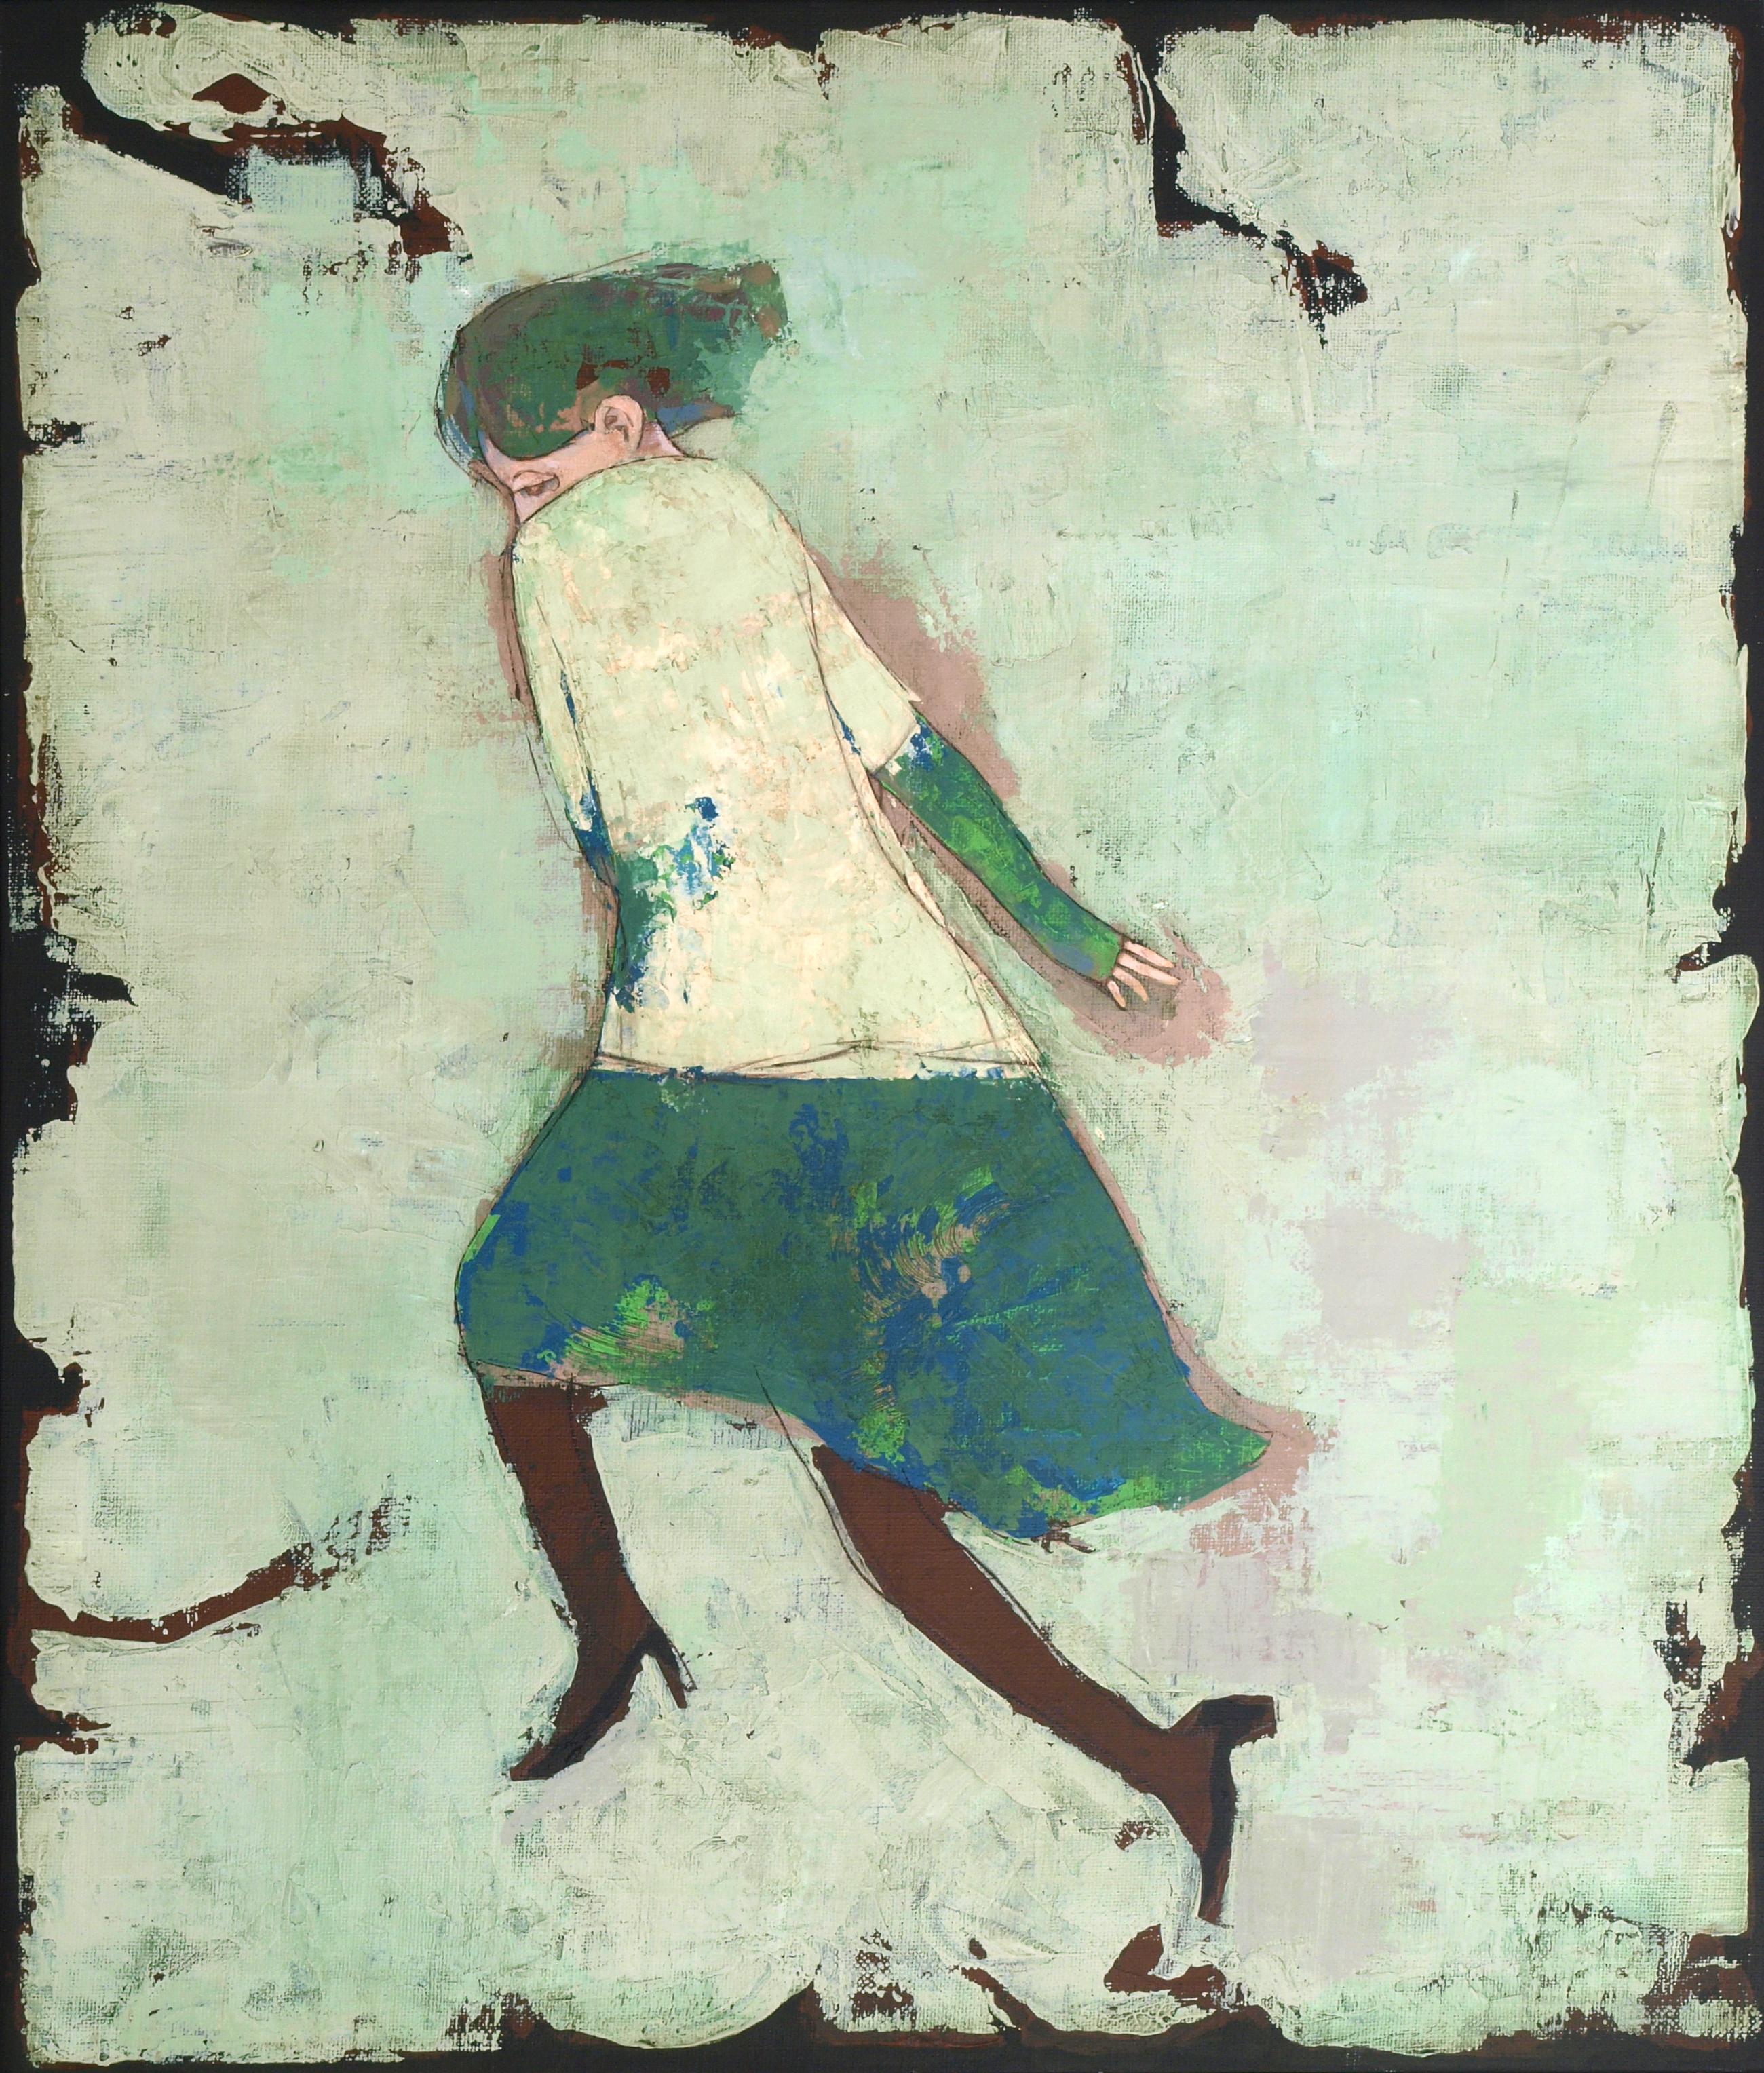 Woman running [Female, Acrylic, Ink on canvas, Alone, Run posture, Subtle mood] - Mixed Media Art by Kiseok Kim